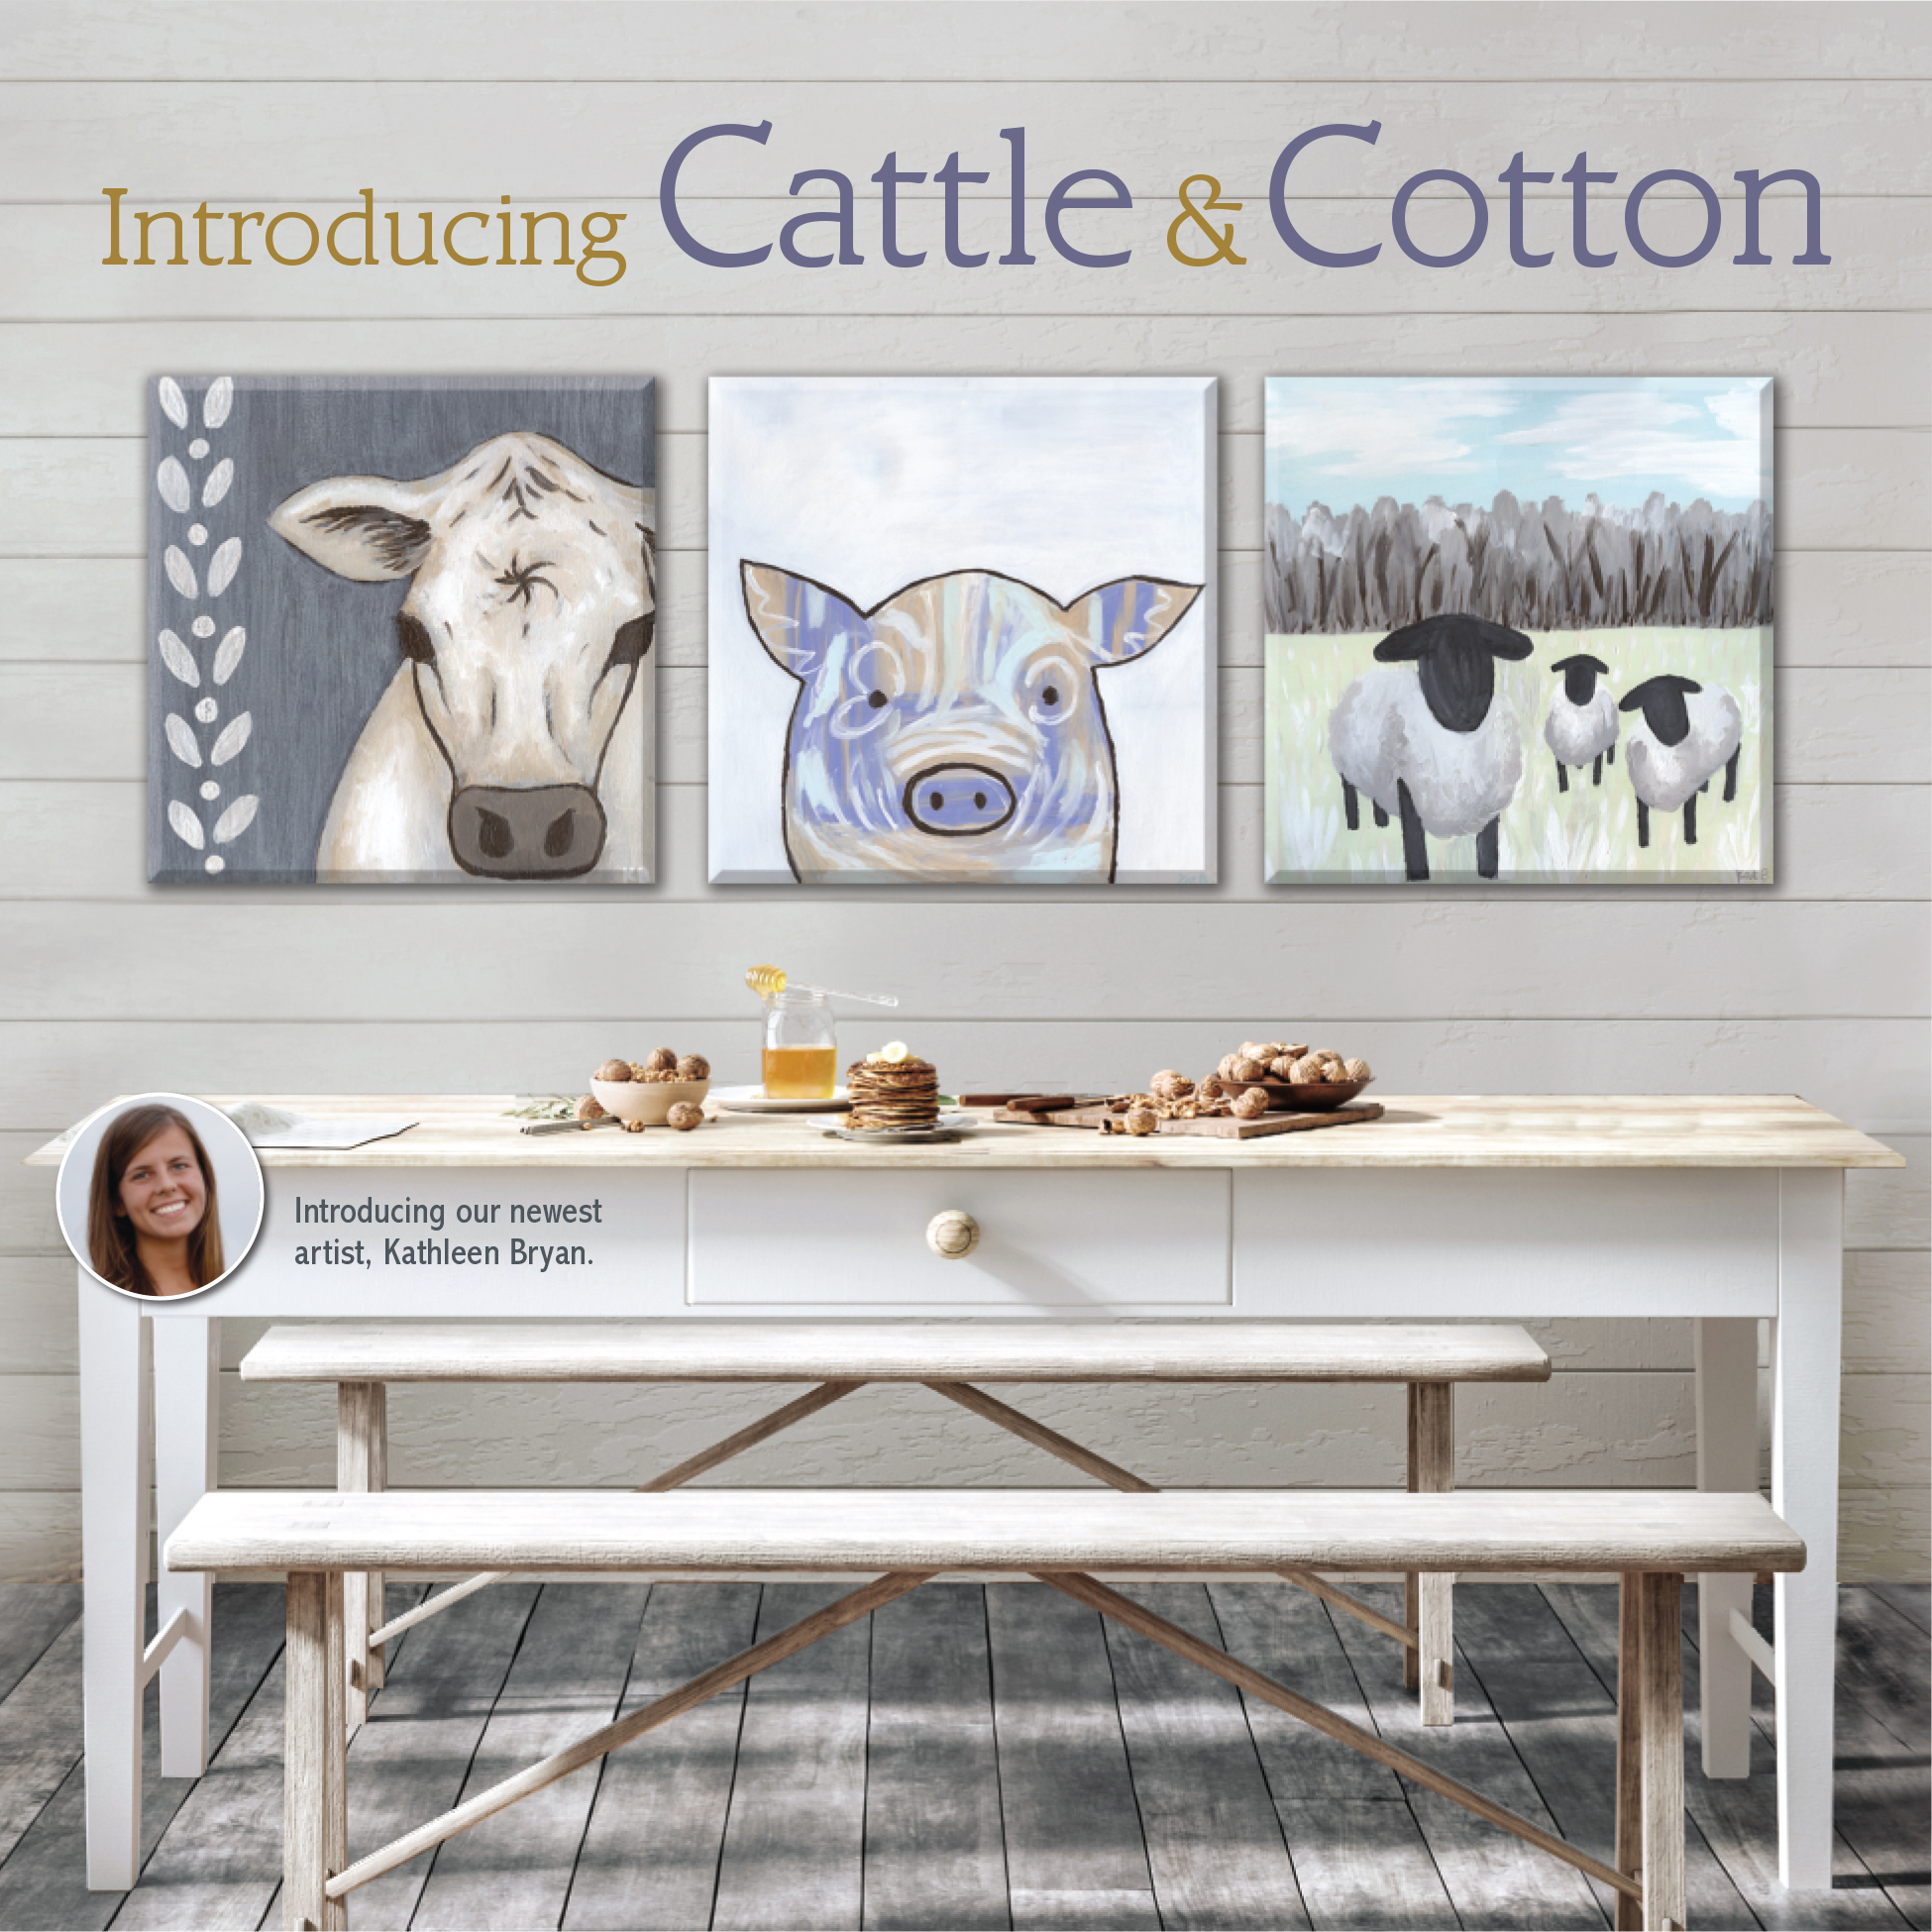 Cattle & Cotton